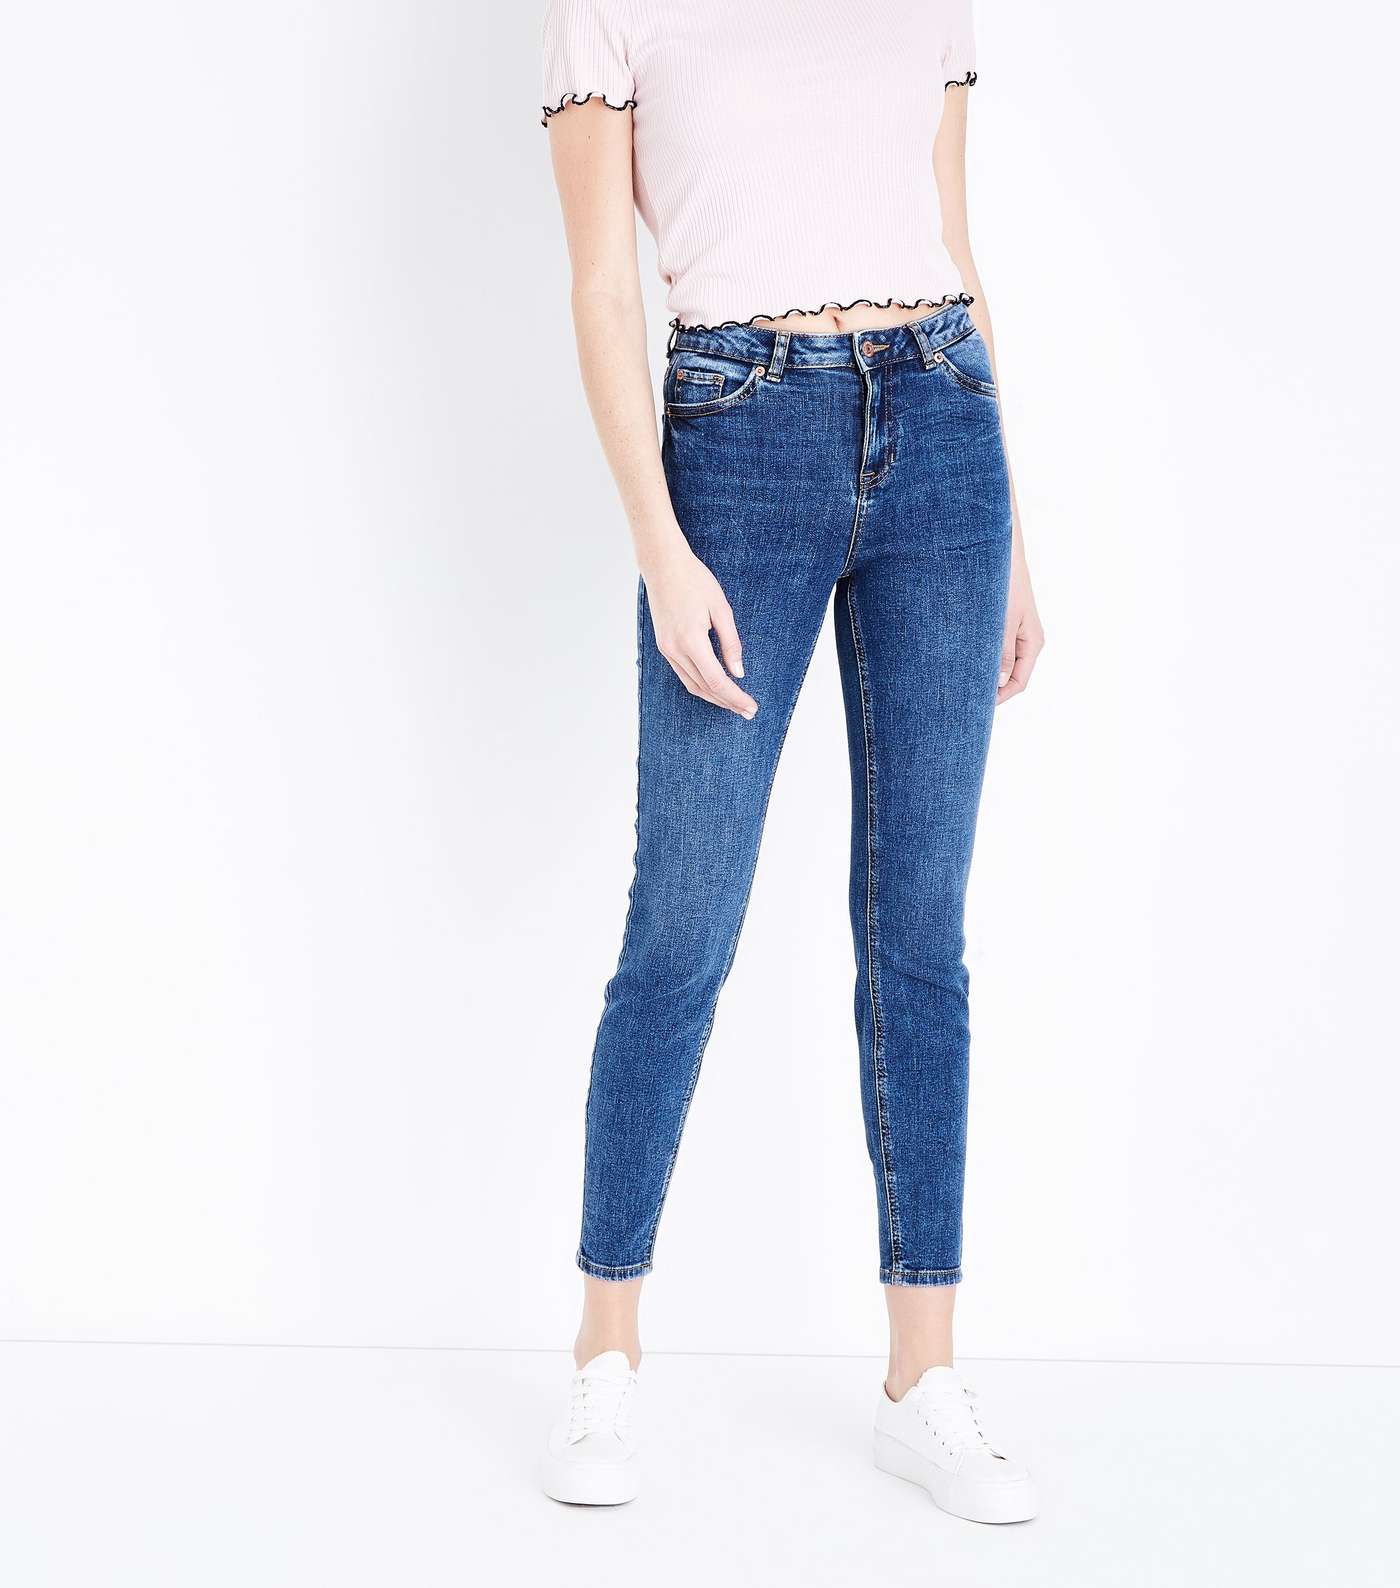 Blue Ankle Grazer Skinny Jenna Jeans Image 2